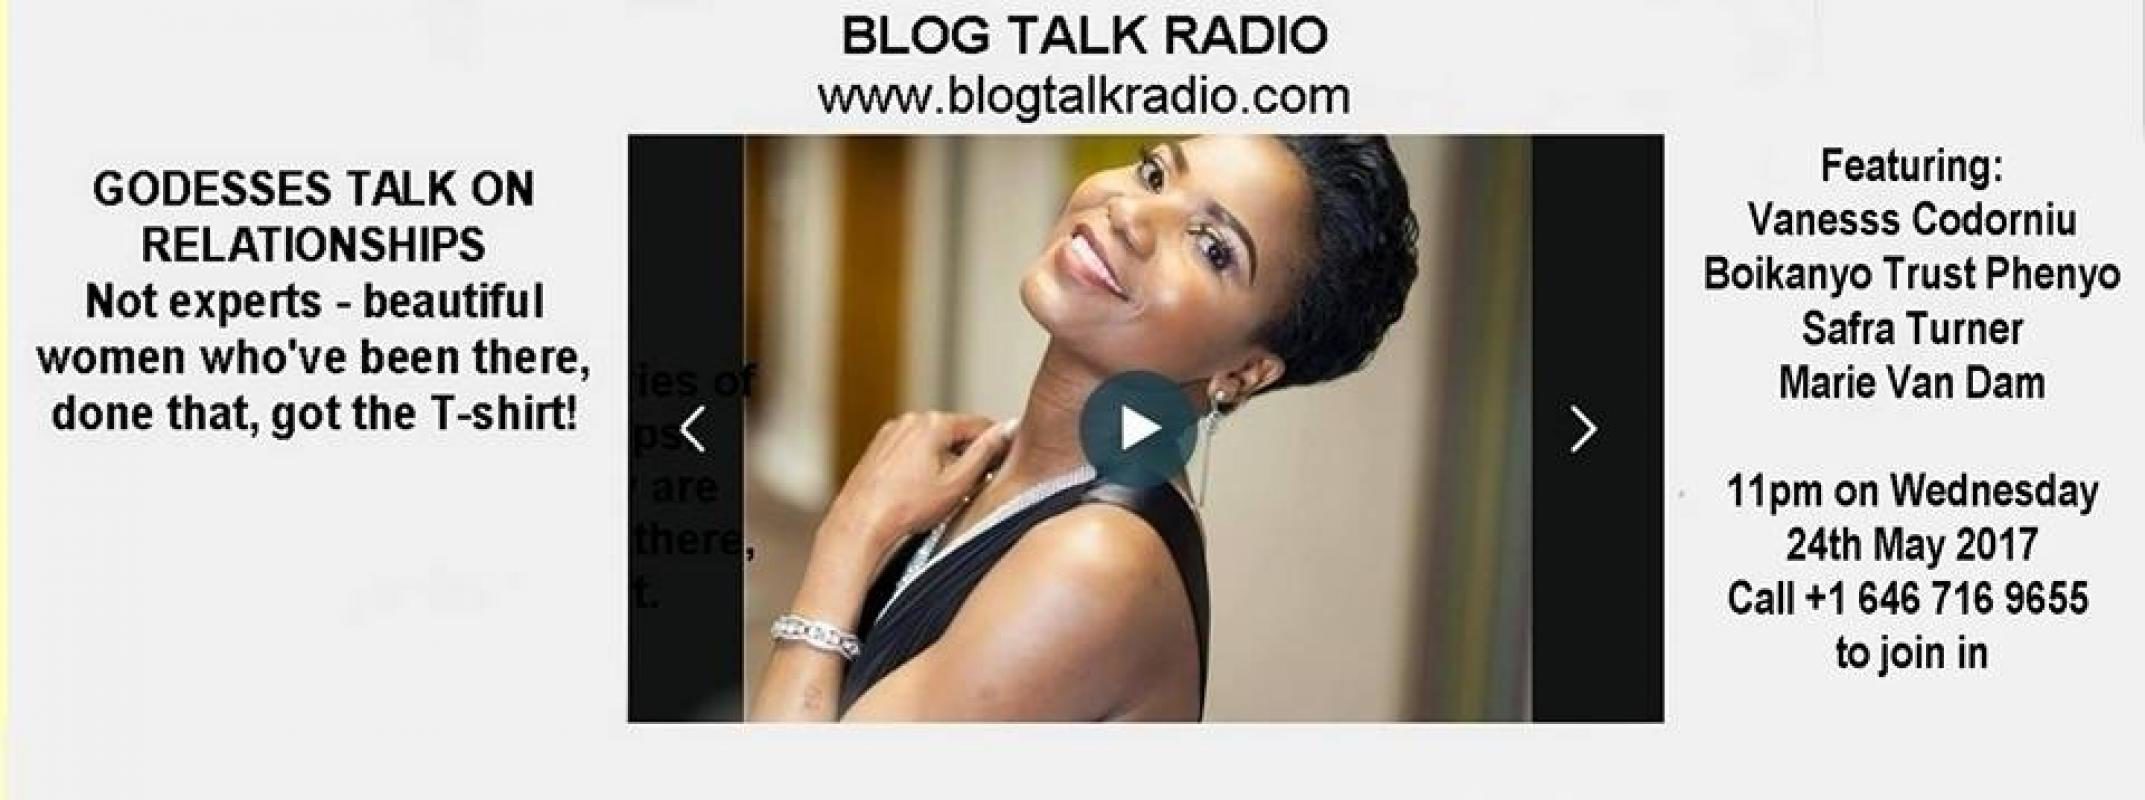 Blog Talk Radio - Goddesses Talk on Relationships